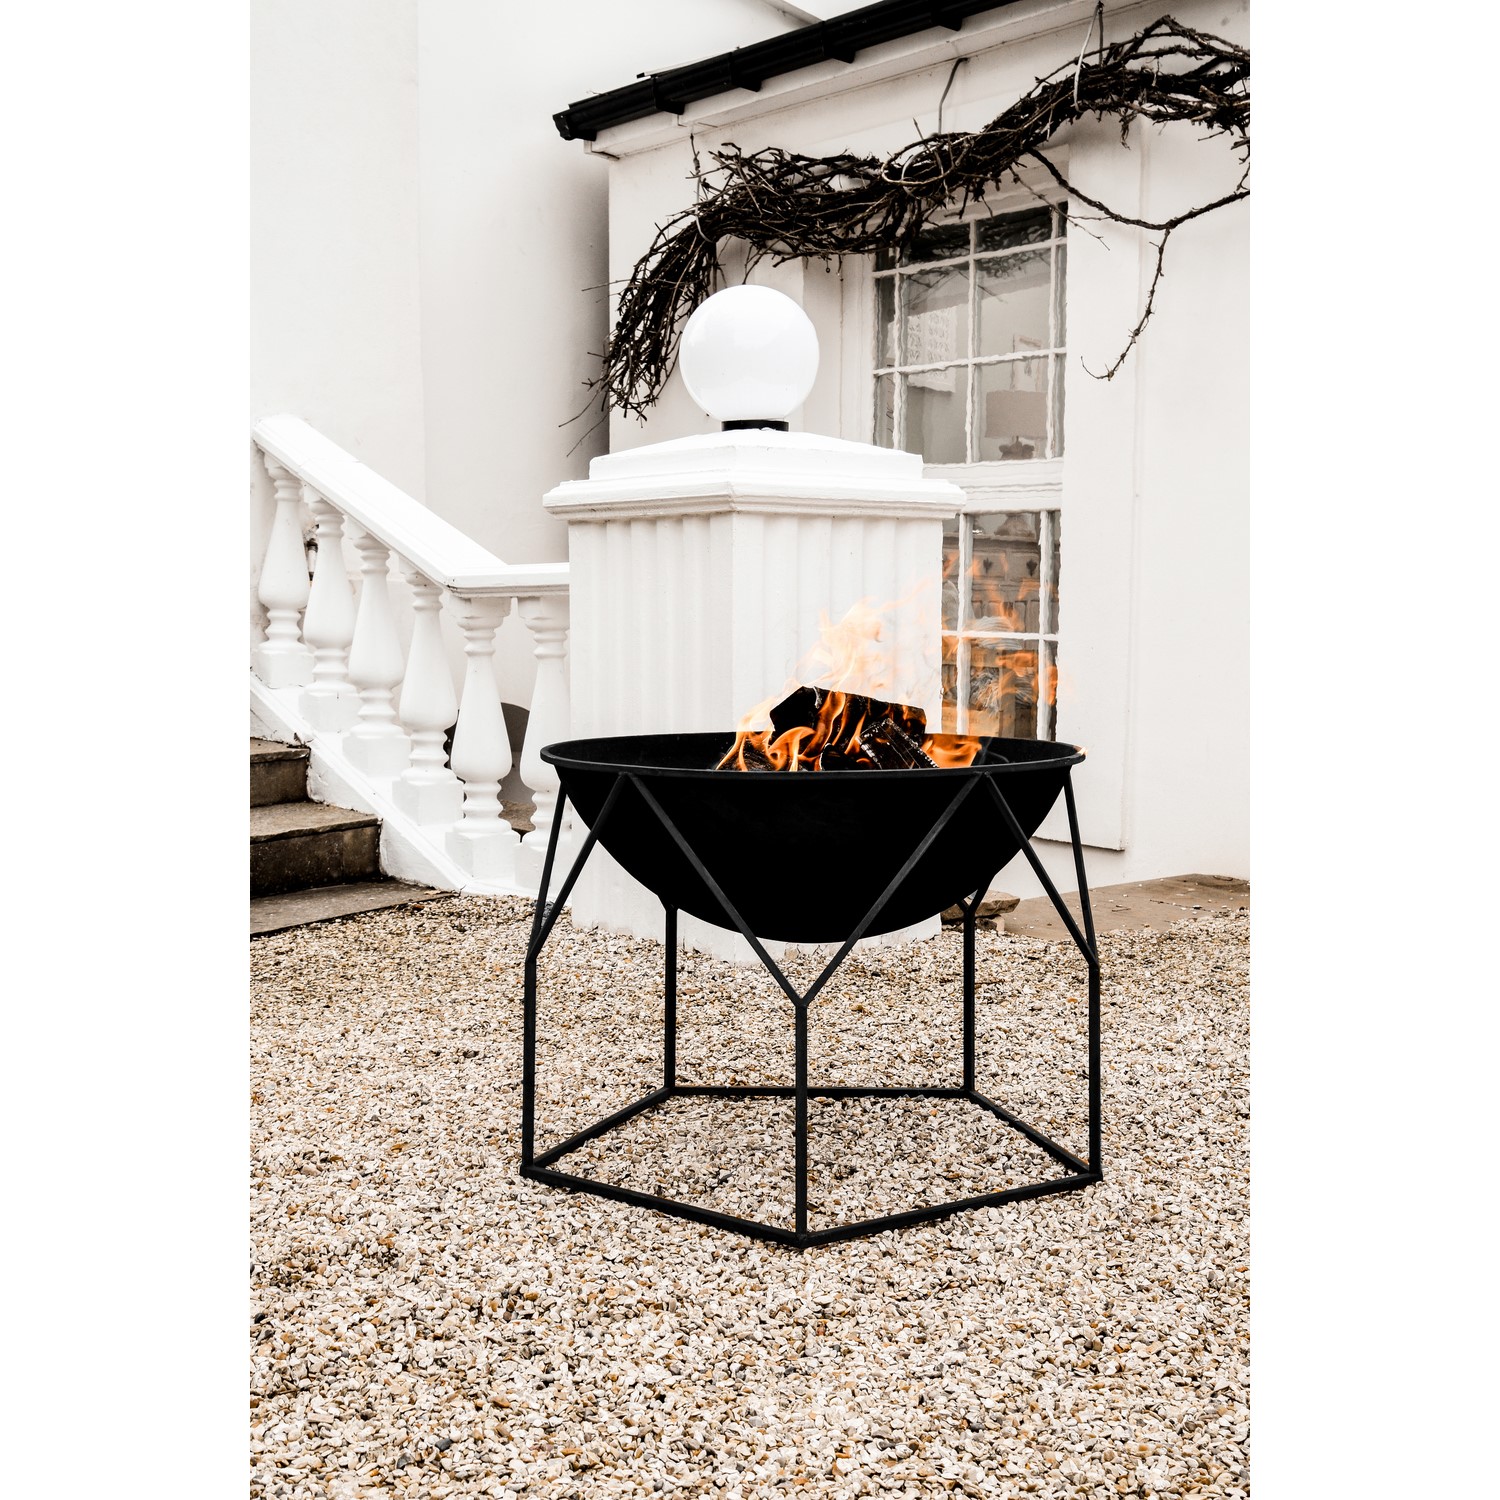 Read more about Ivyline outdoor buckingham firebowl black